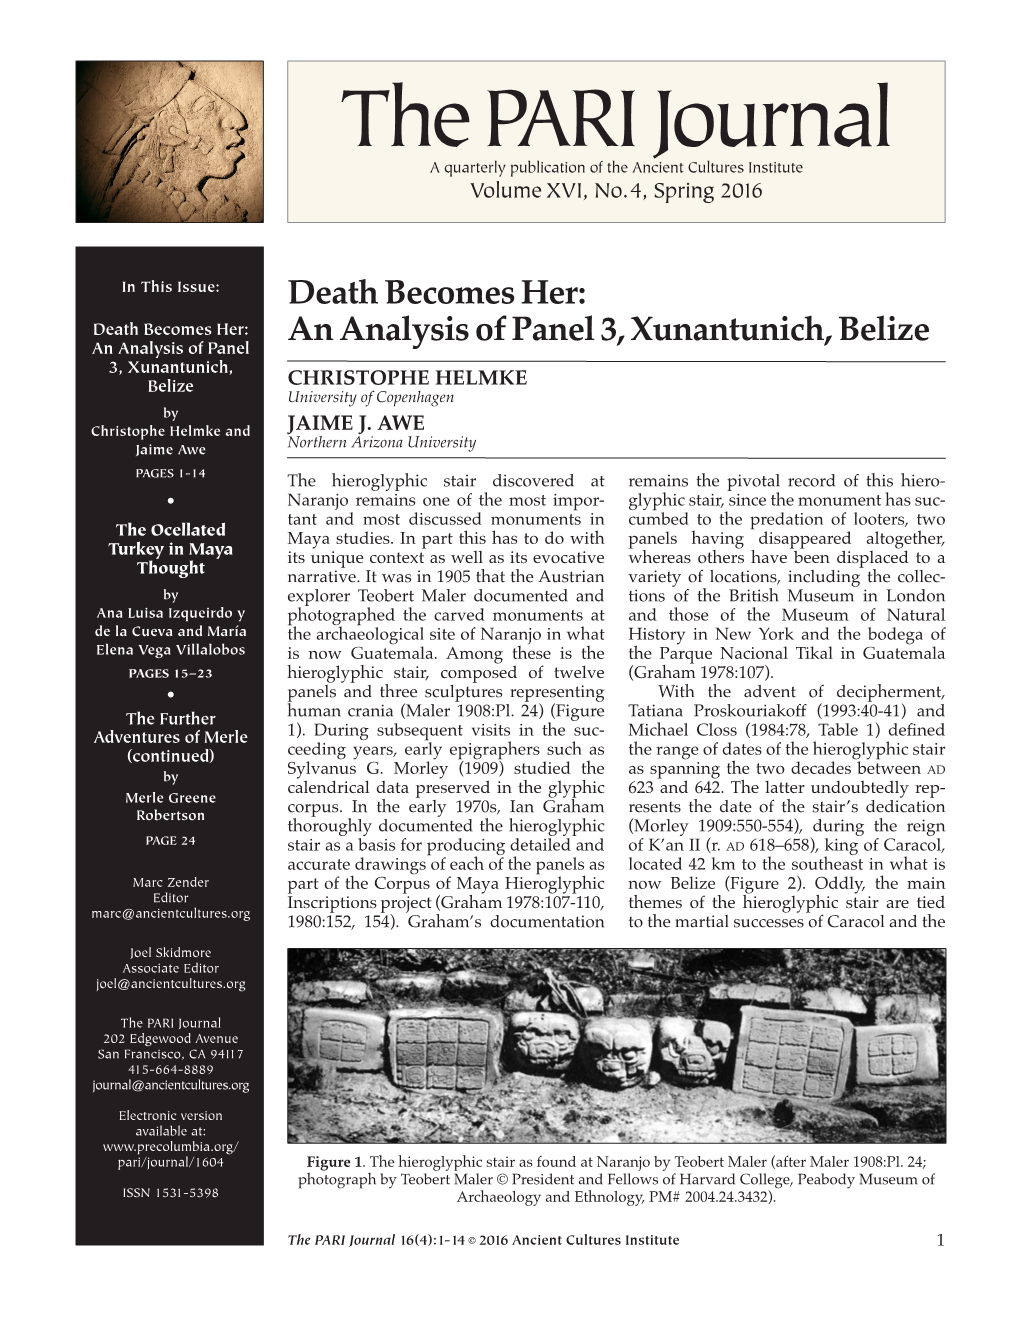 Death Becomes Her: an Analysis of Panel 3, Xunantunich